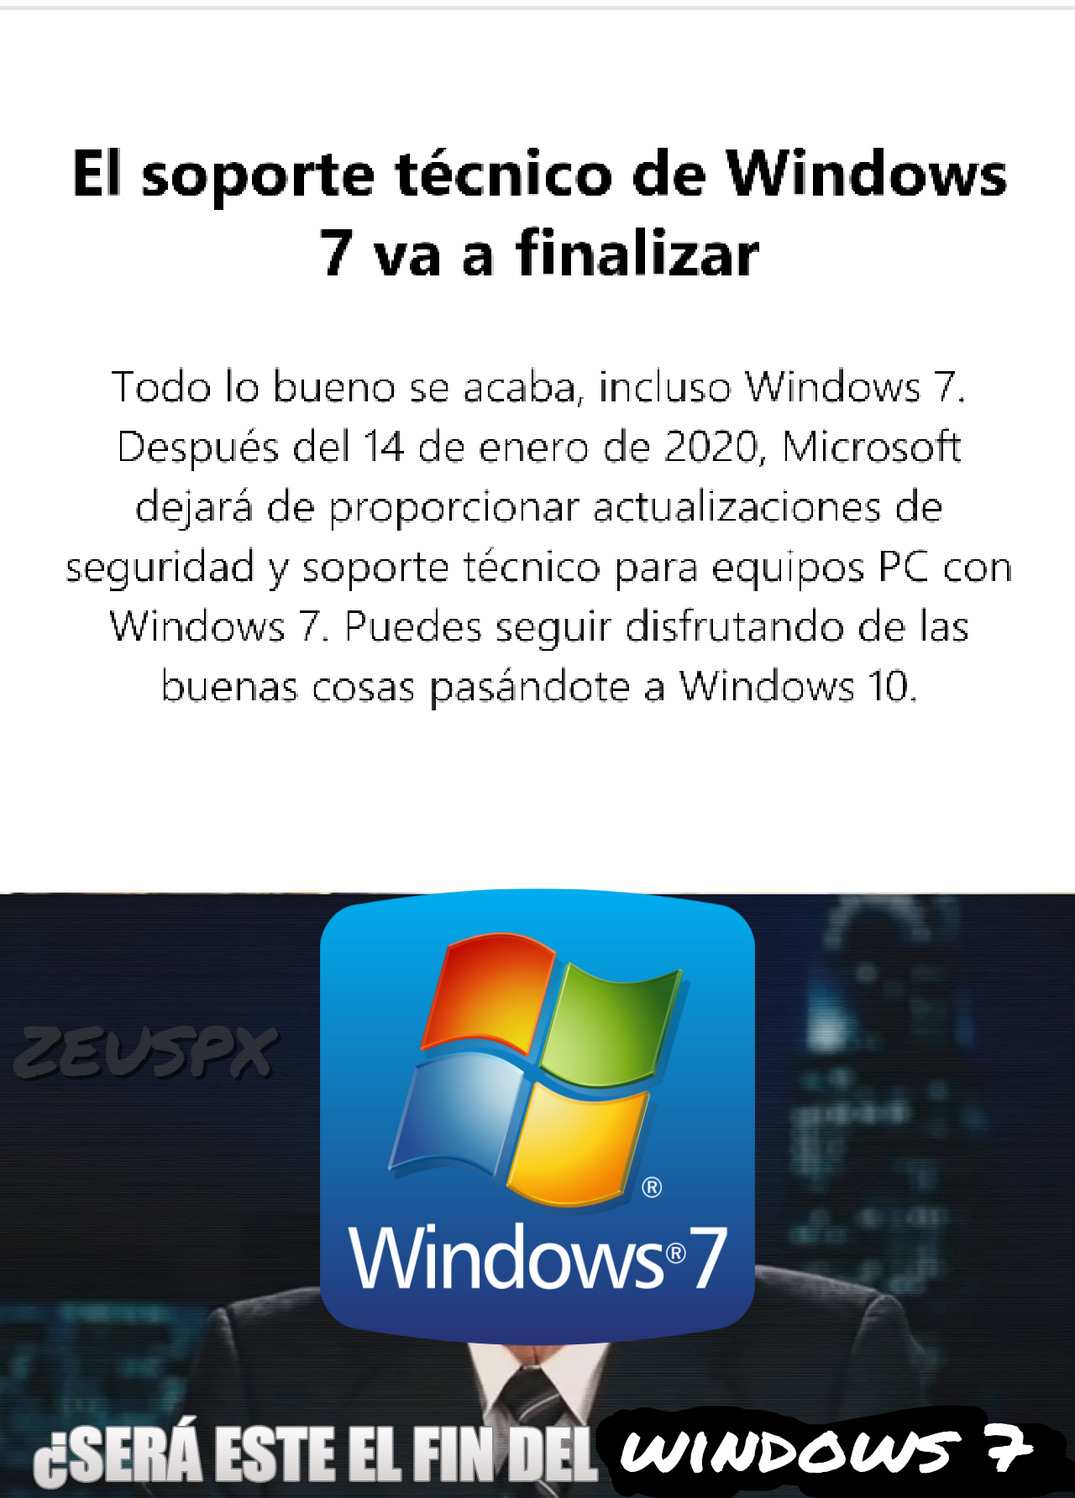 Le tuve mucha confianza a Windows 7 - meme